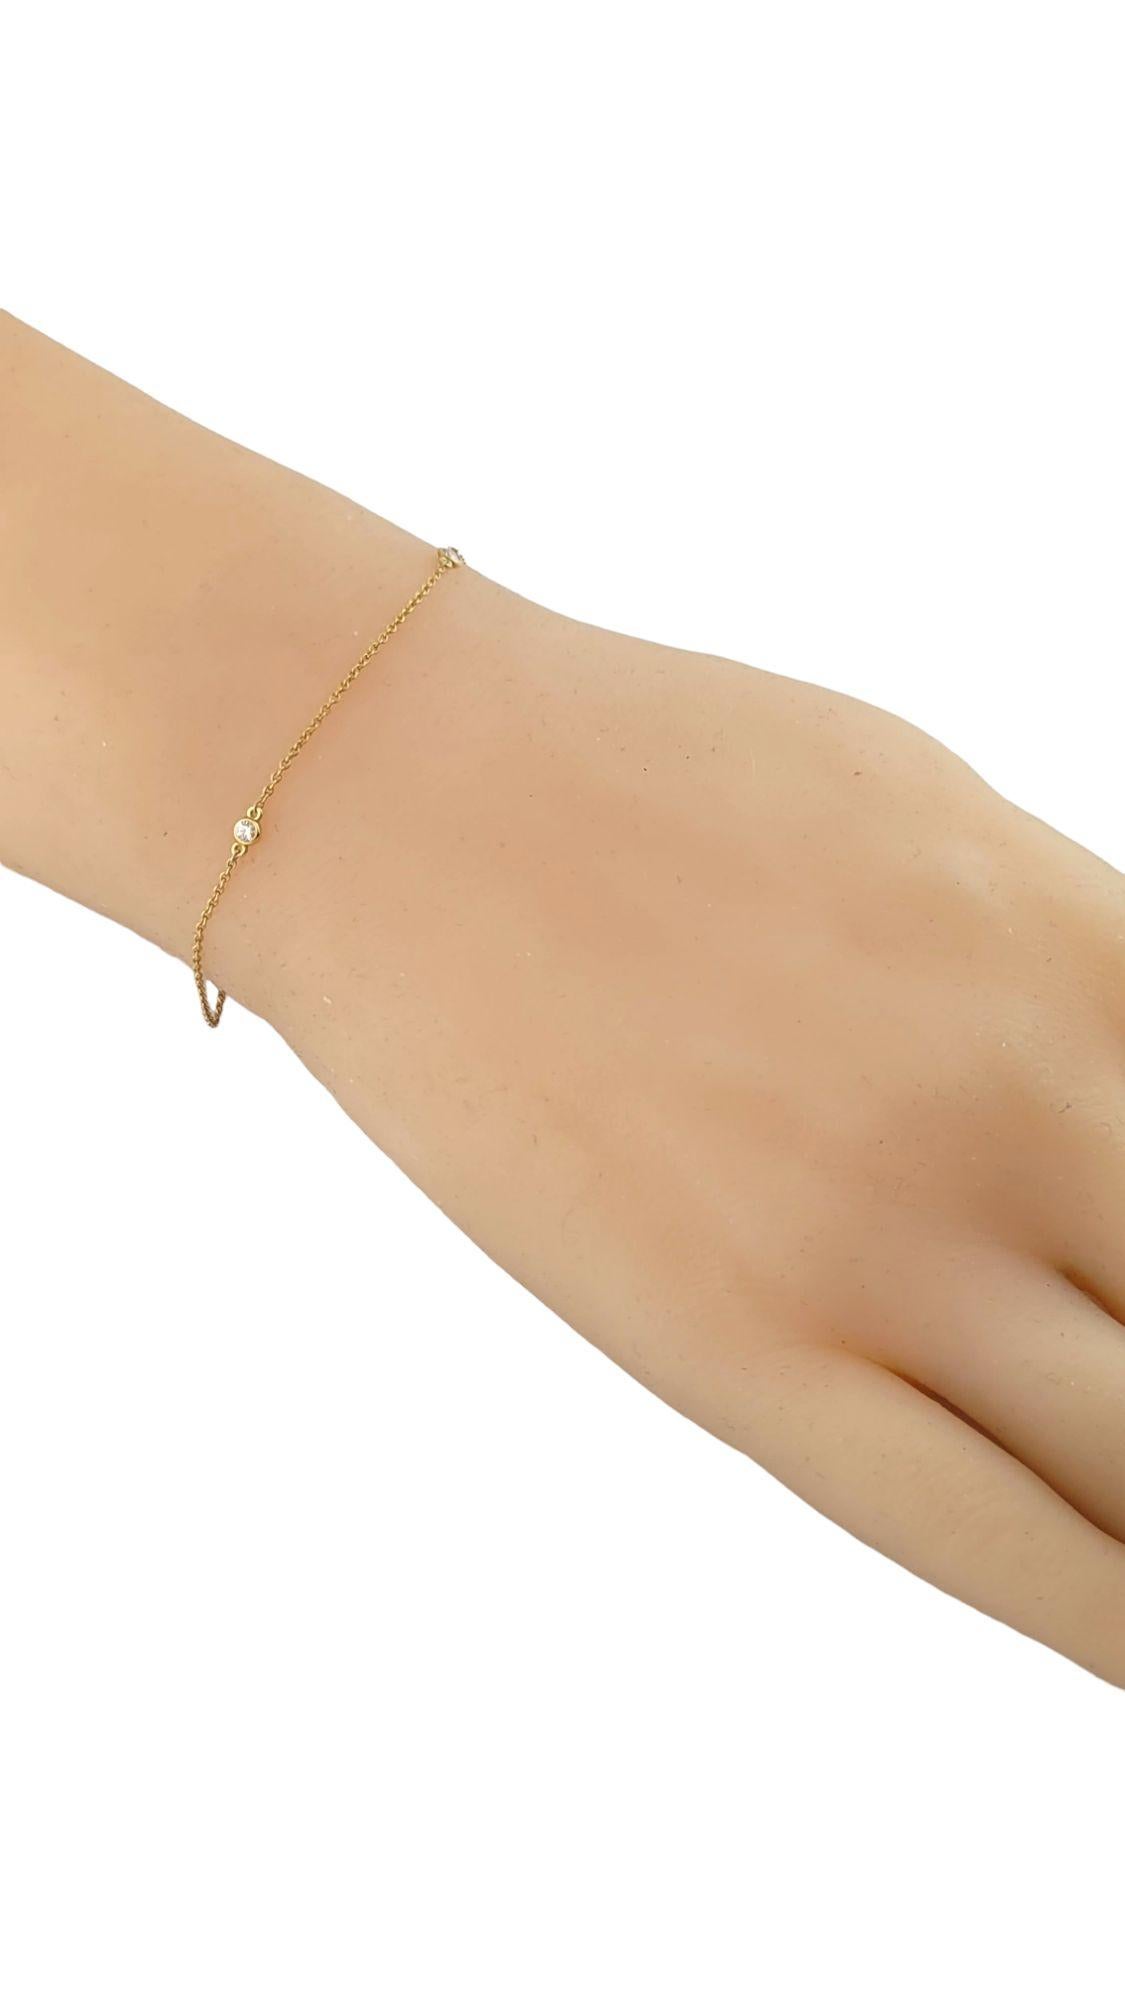 Tiffany & Co. Elsa Peretti 18K Yellow Gold Chain Diamond by Yard Bracelet

Gorgeous Tiffany & Co. 18K gold chain bracelet featuring 3 sparkling, round cut diamonds!

Approximate total diamond weight: 0.30 cts

Diamond clarity: VS1

Diamond color: